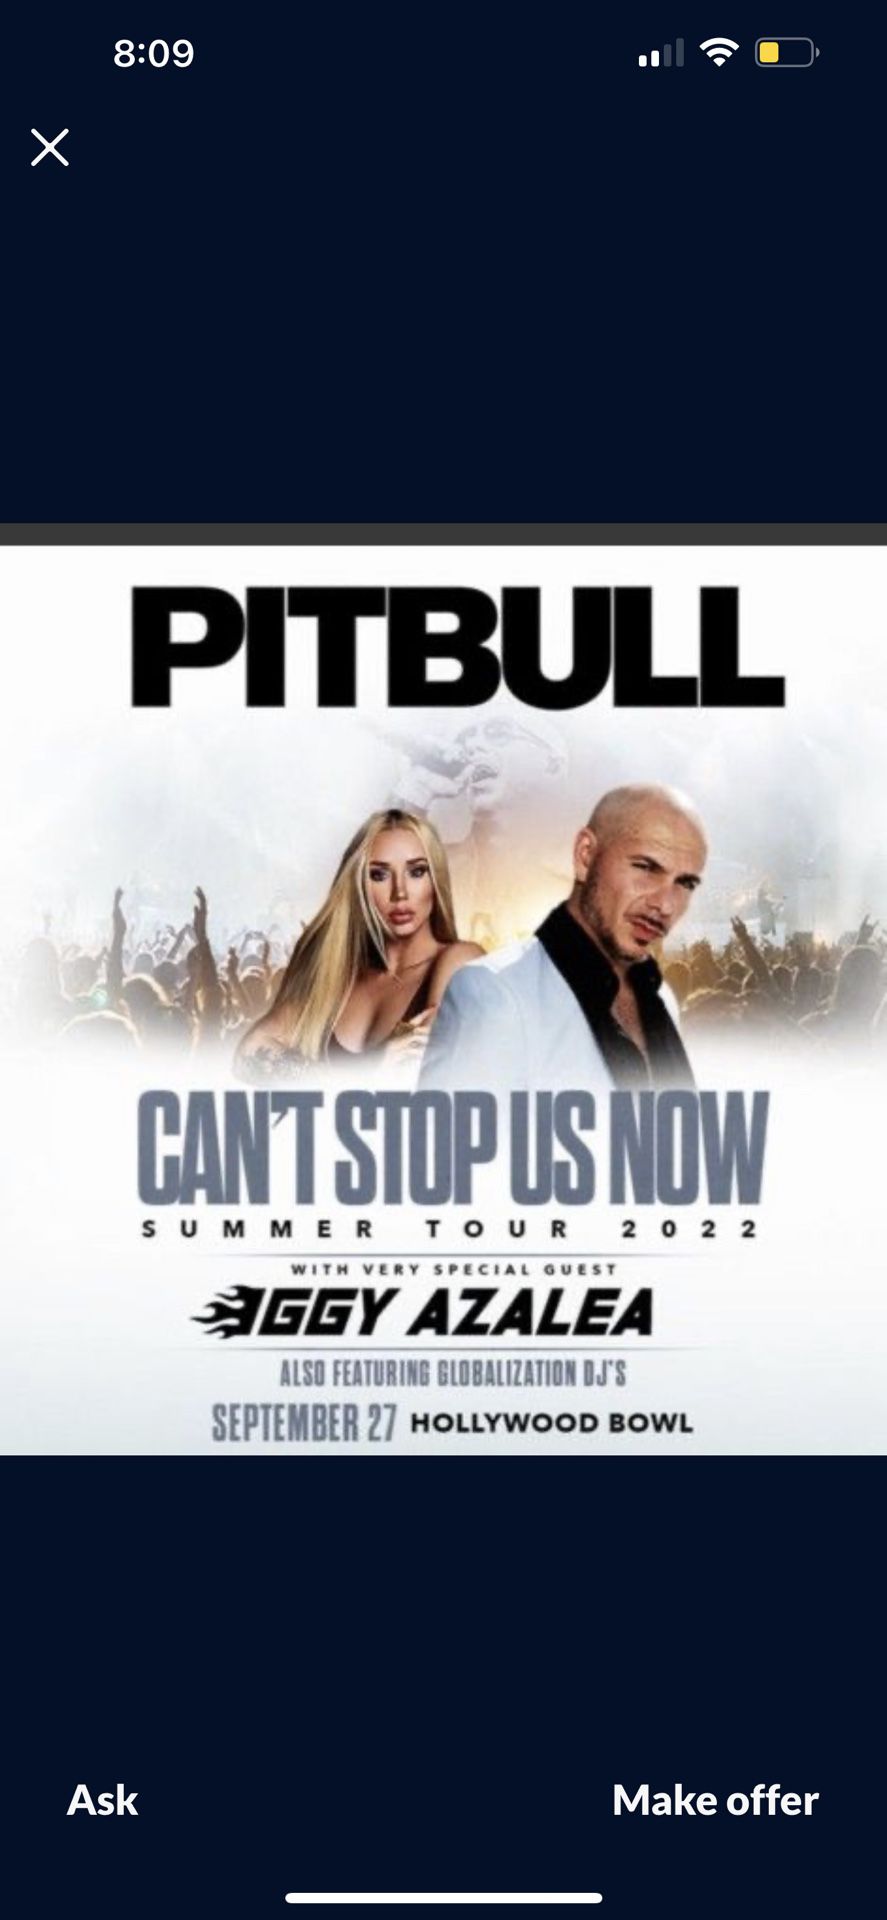 Pitbull Concert Tickets 